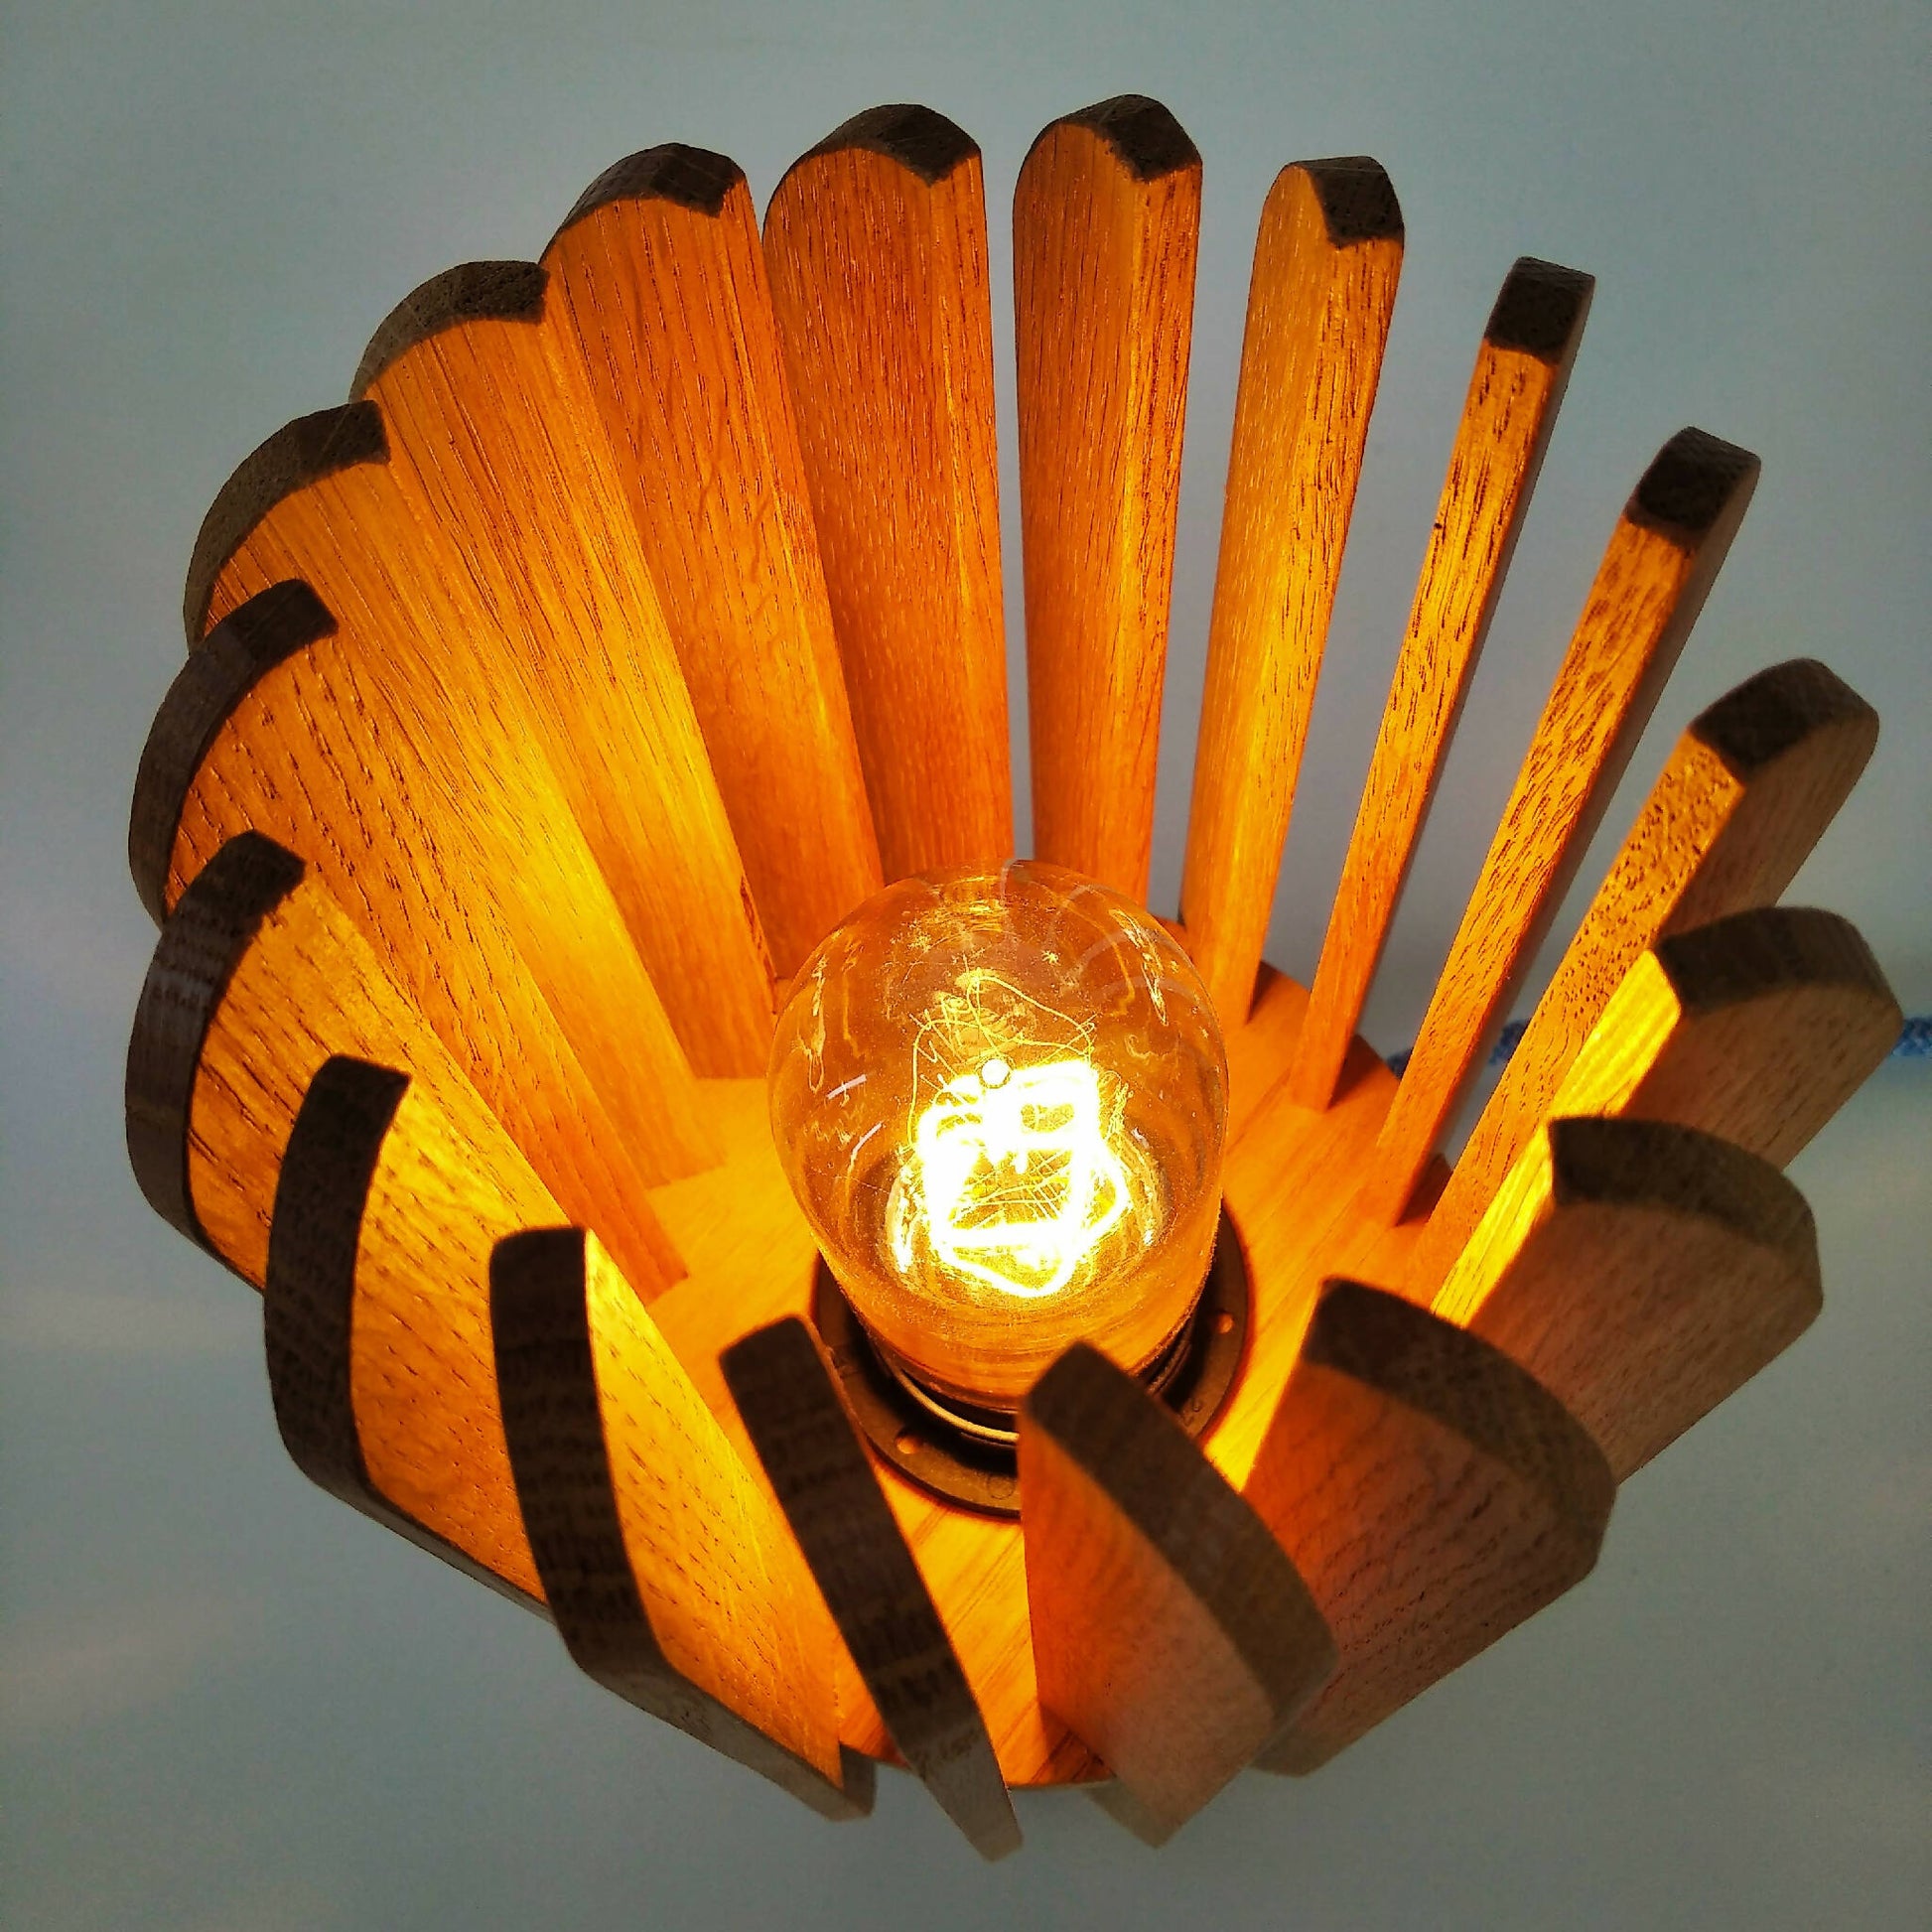 luminaire artisanal en bois fait-main lampe artisanat francais